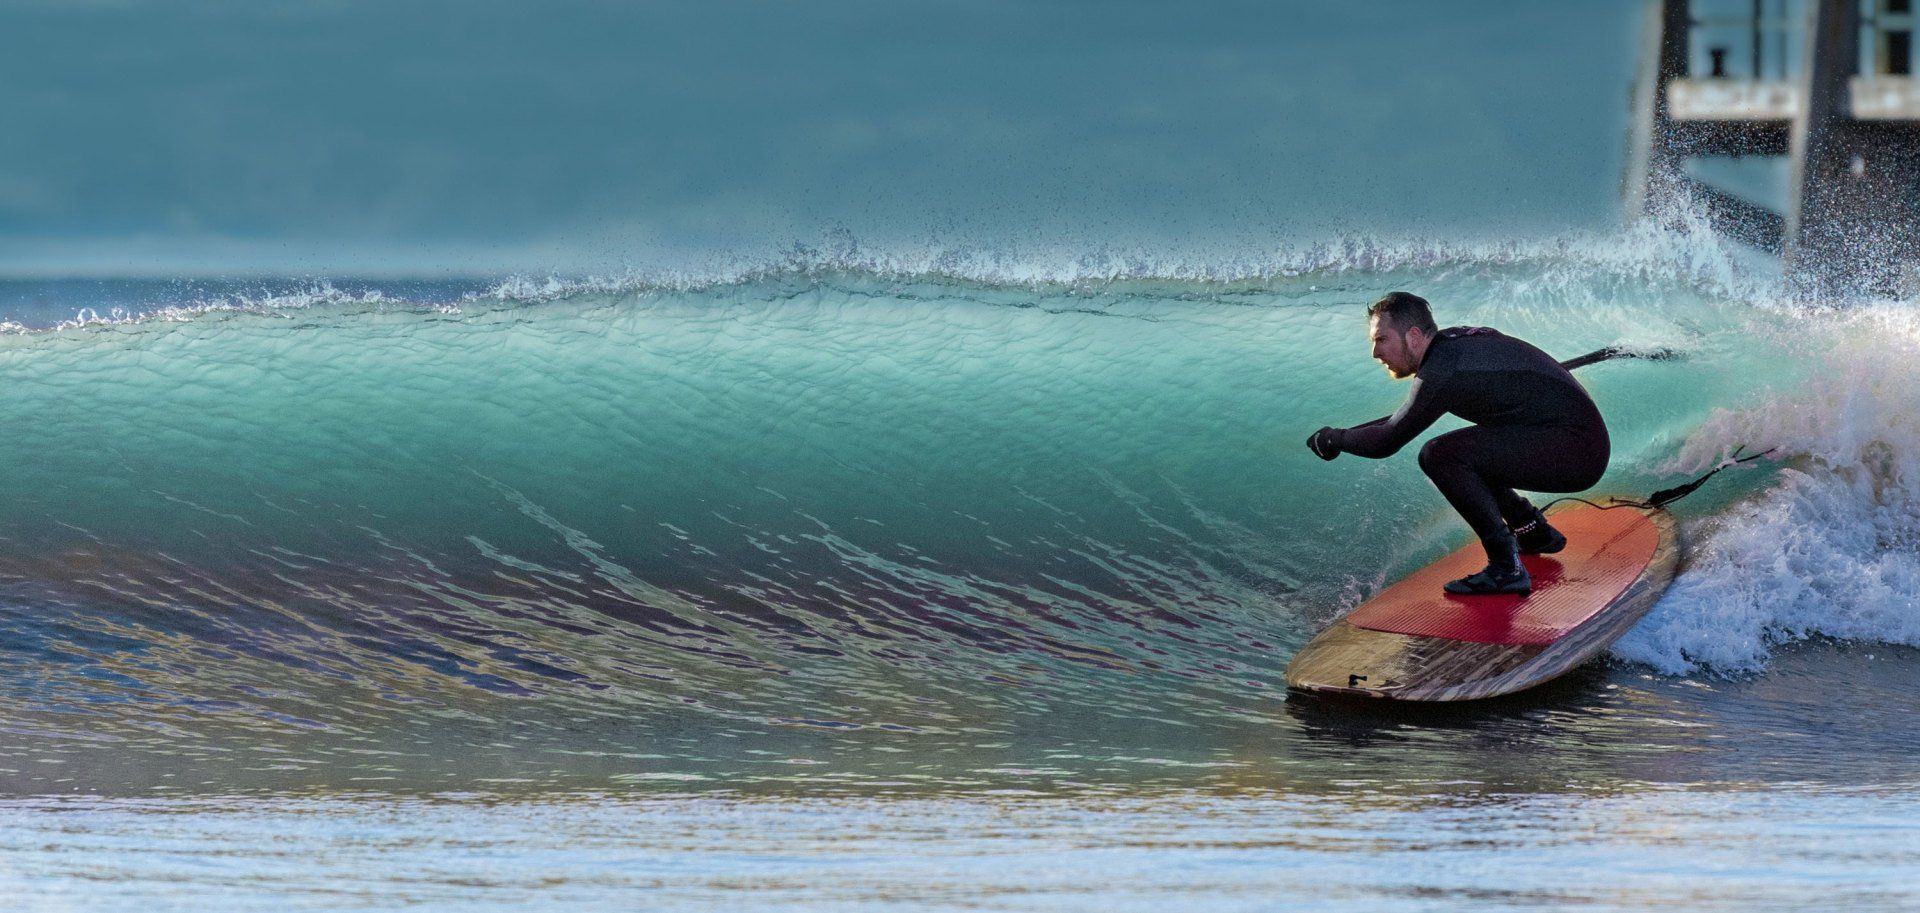 surfing hypr hawaii boards at bournemouth dorset